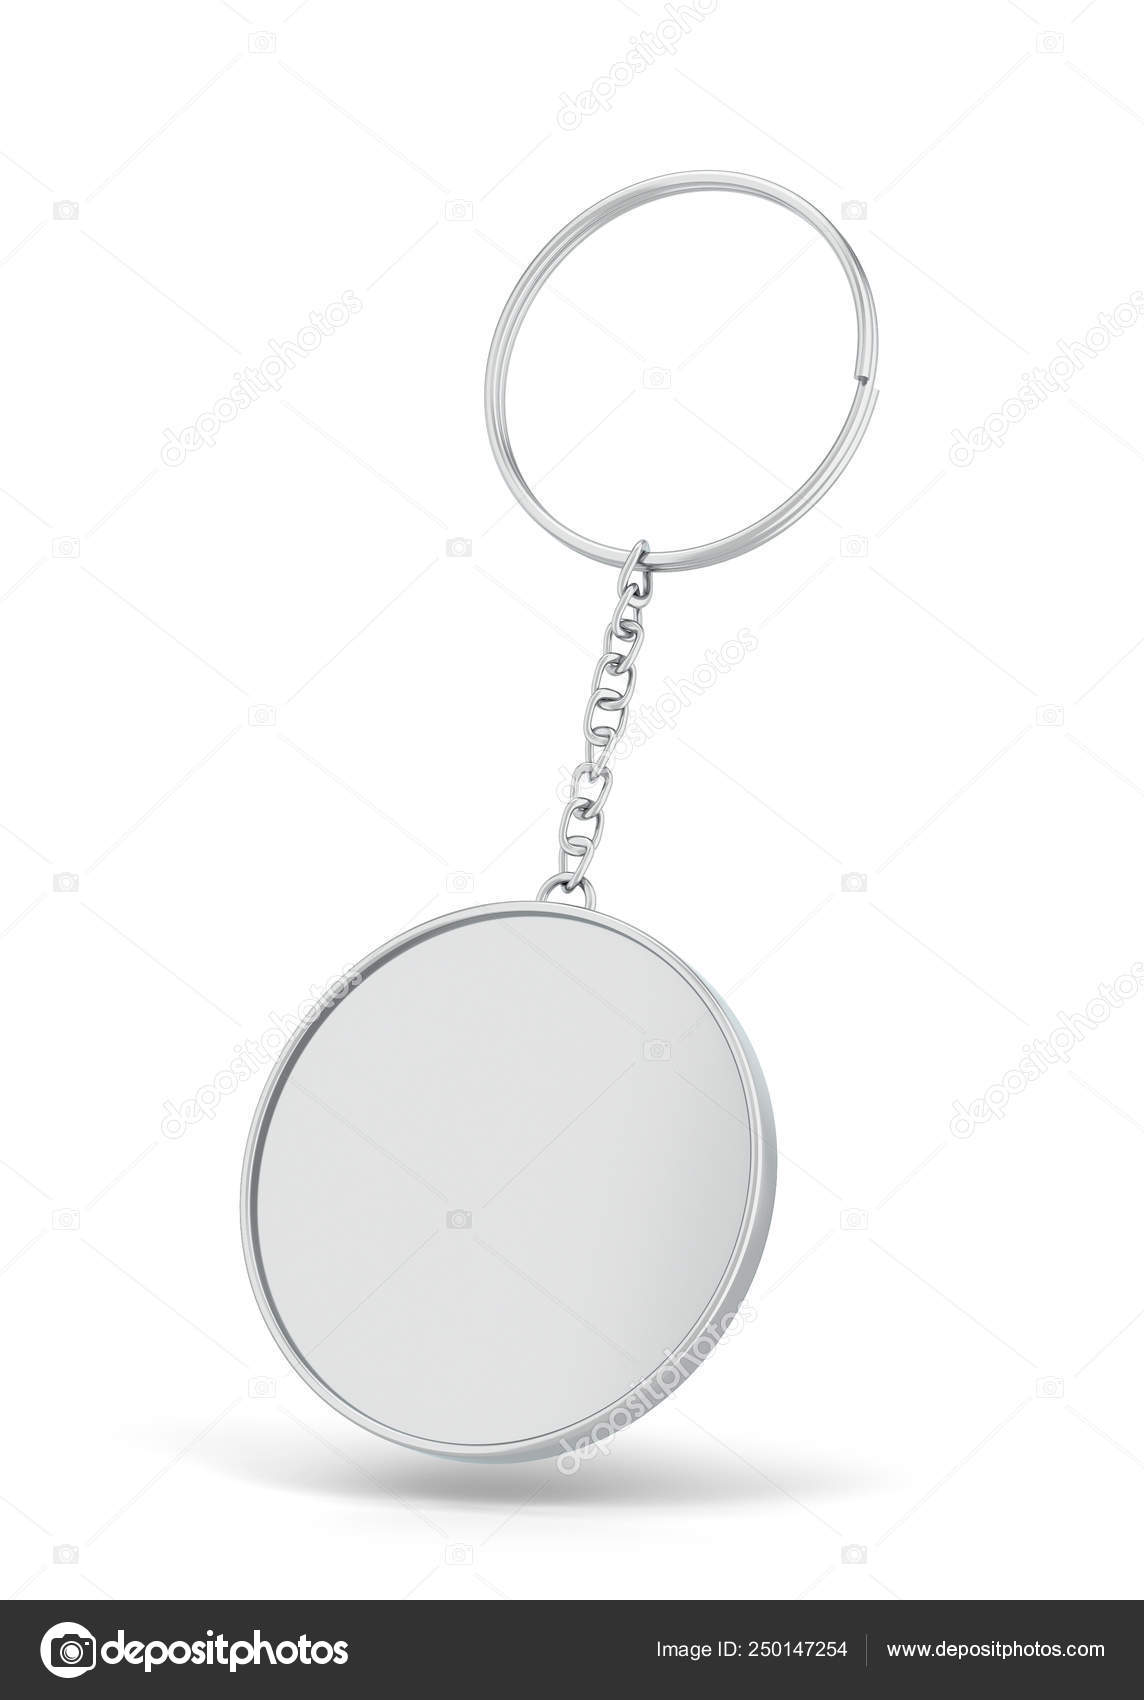 Download Blank Metallic Keychain Mockup Stock Photo Image By C Montego 250147254